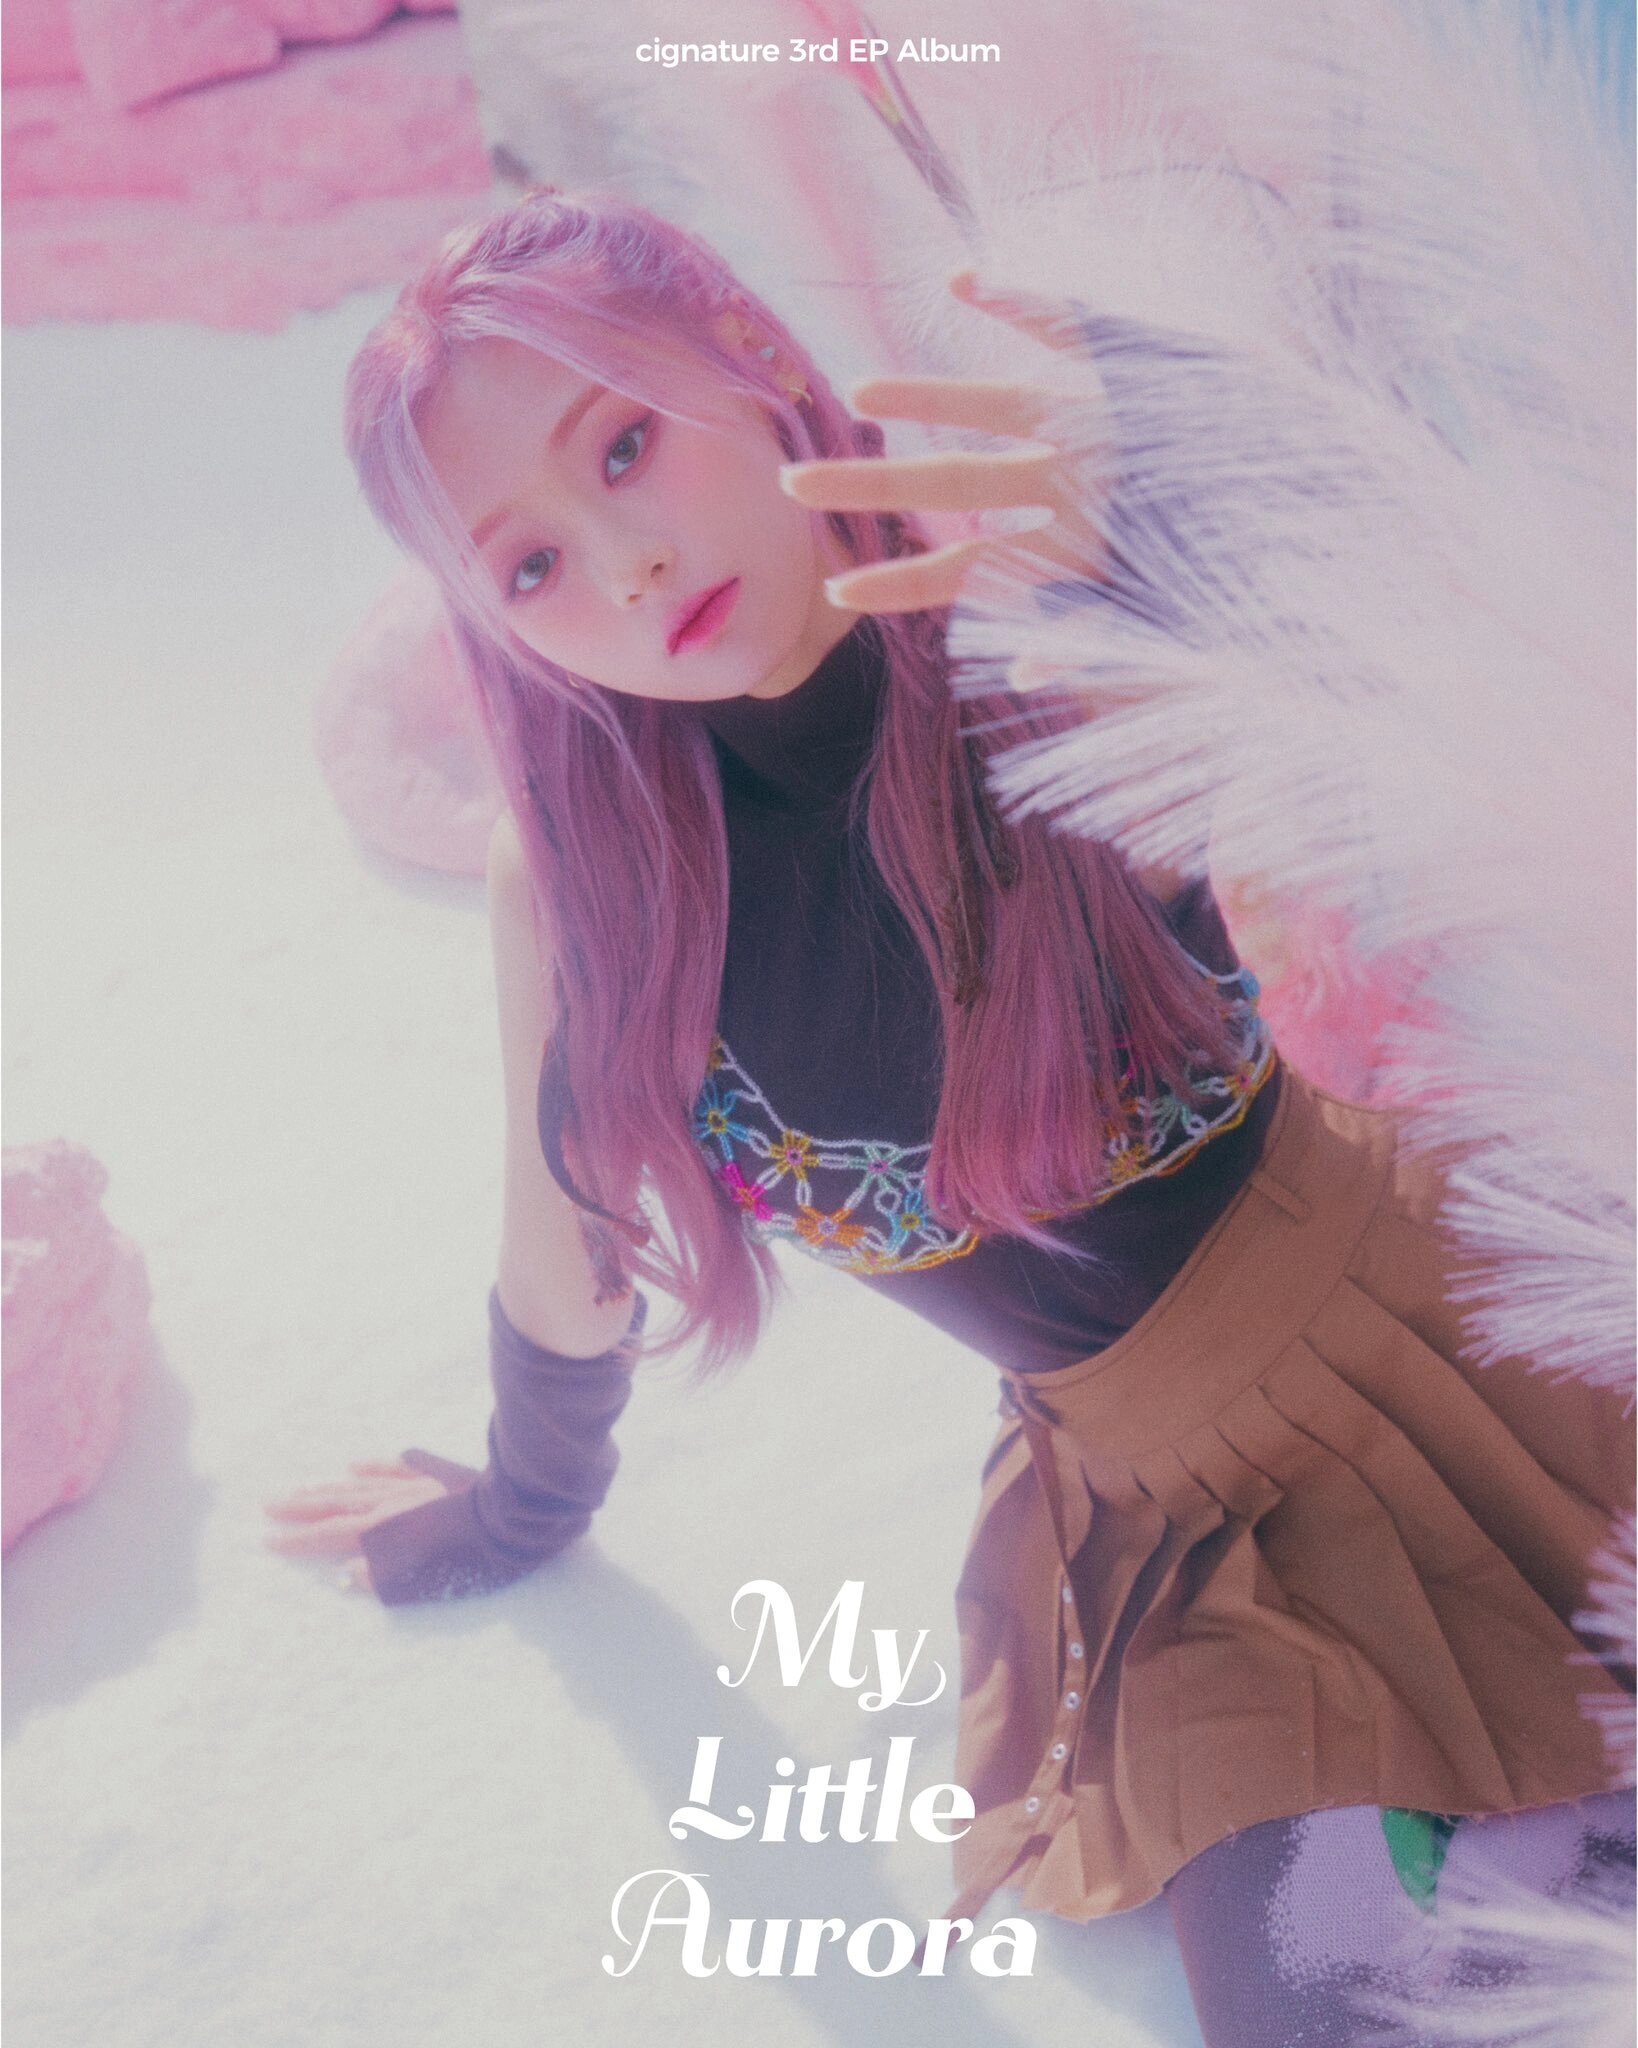 cignature - My Little Aurora 3rd Mini Album teasers | kpopping